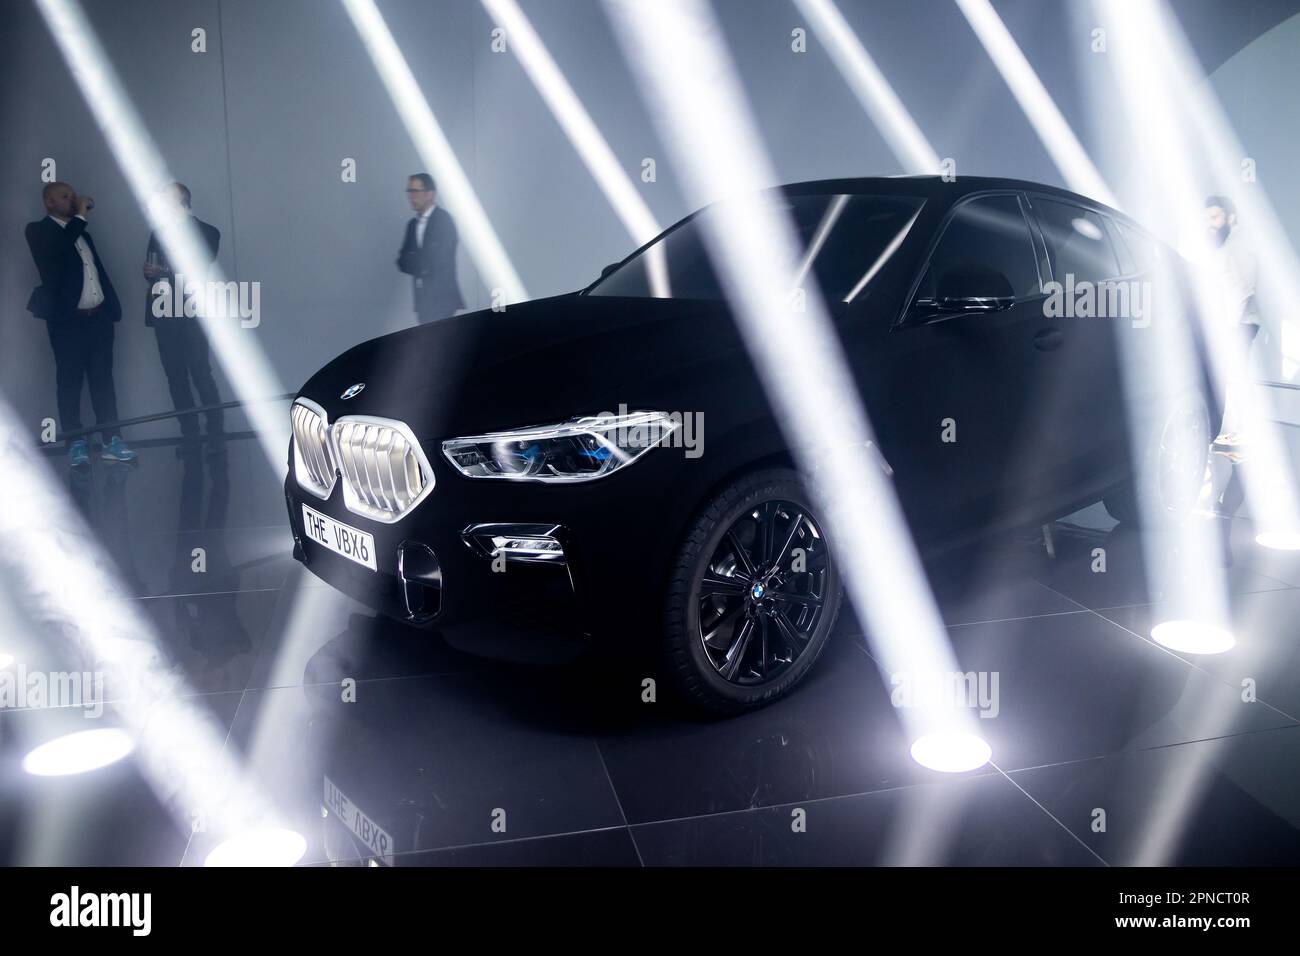 EXCLUSIVE: BMW X6 Vantablack - Upclose videos and new photos